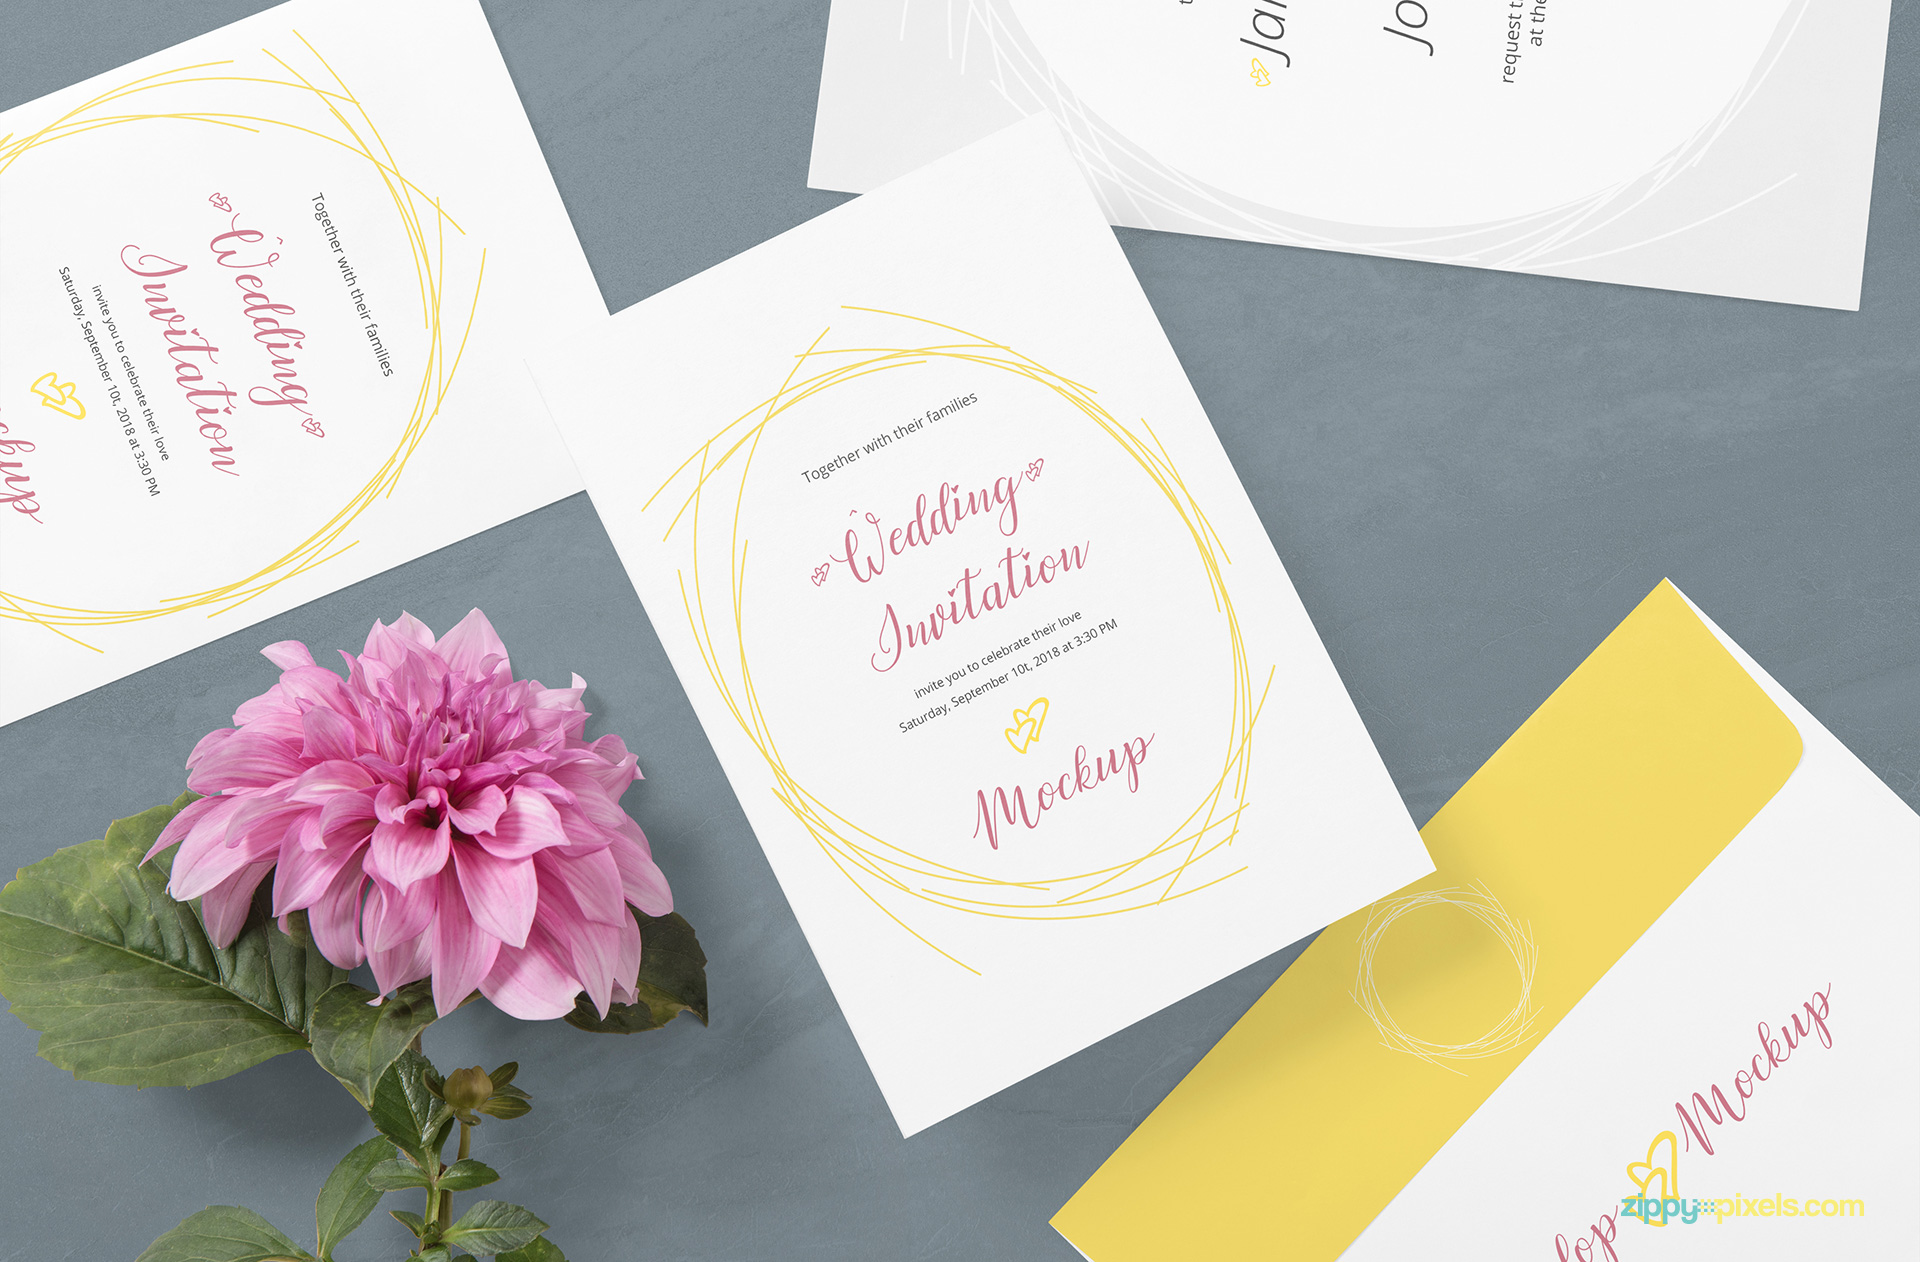 Download Free Wedding Card Mockup PSD | ZippyPixels